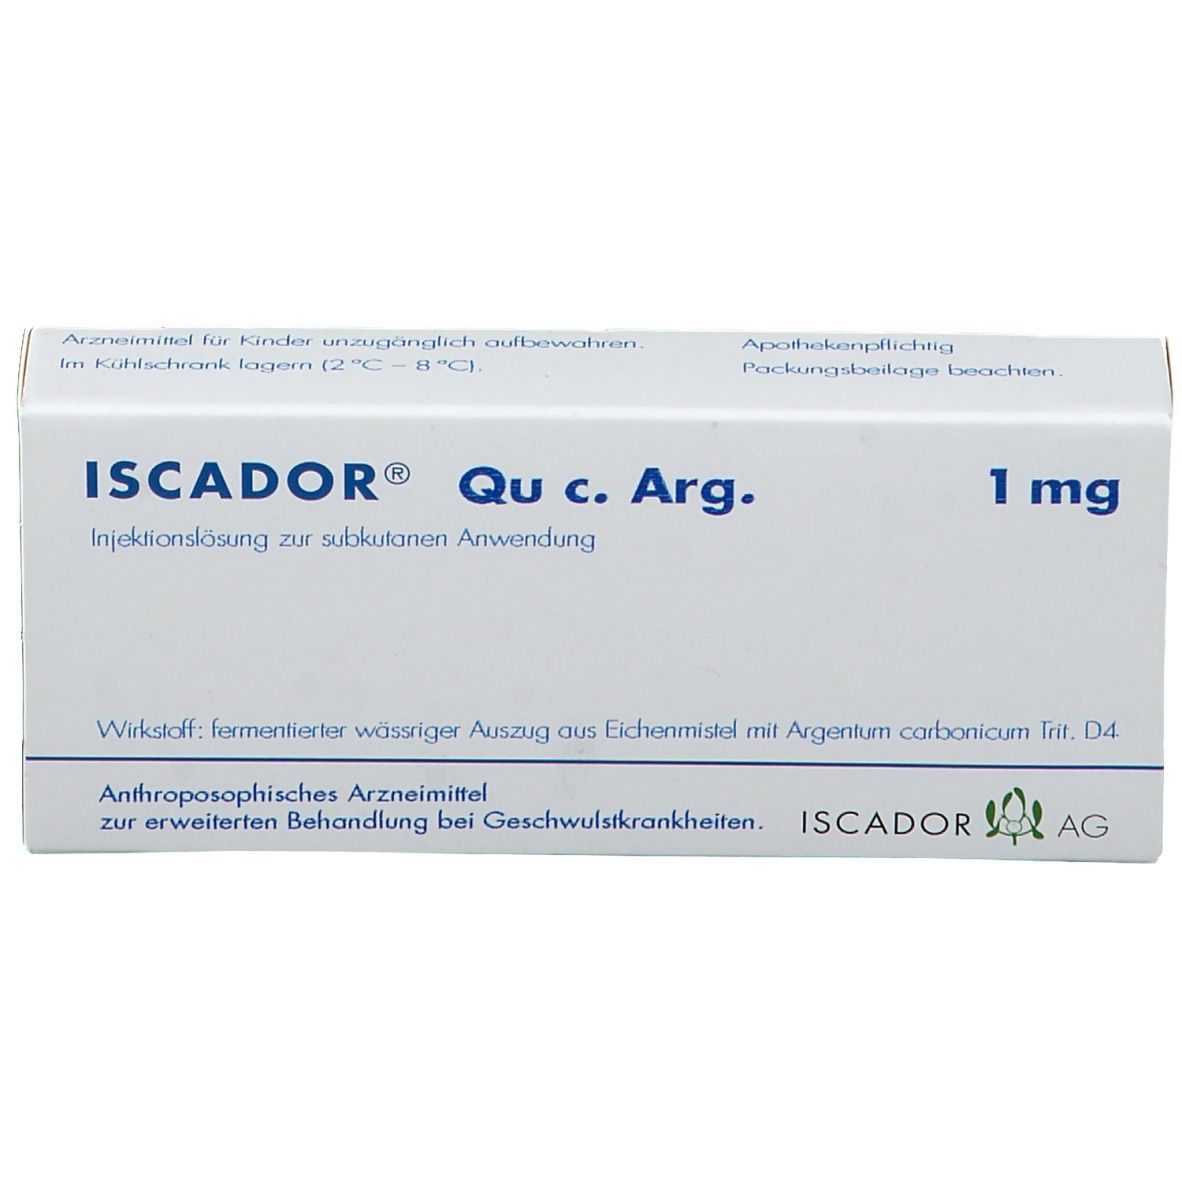 ISCADOR® Qu c. Arg. 1 mg